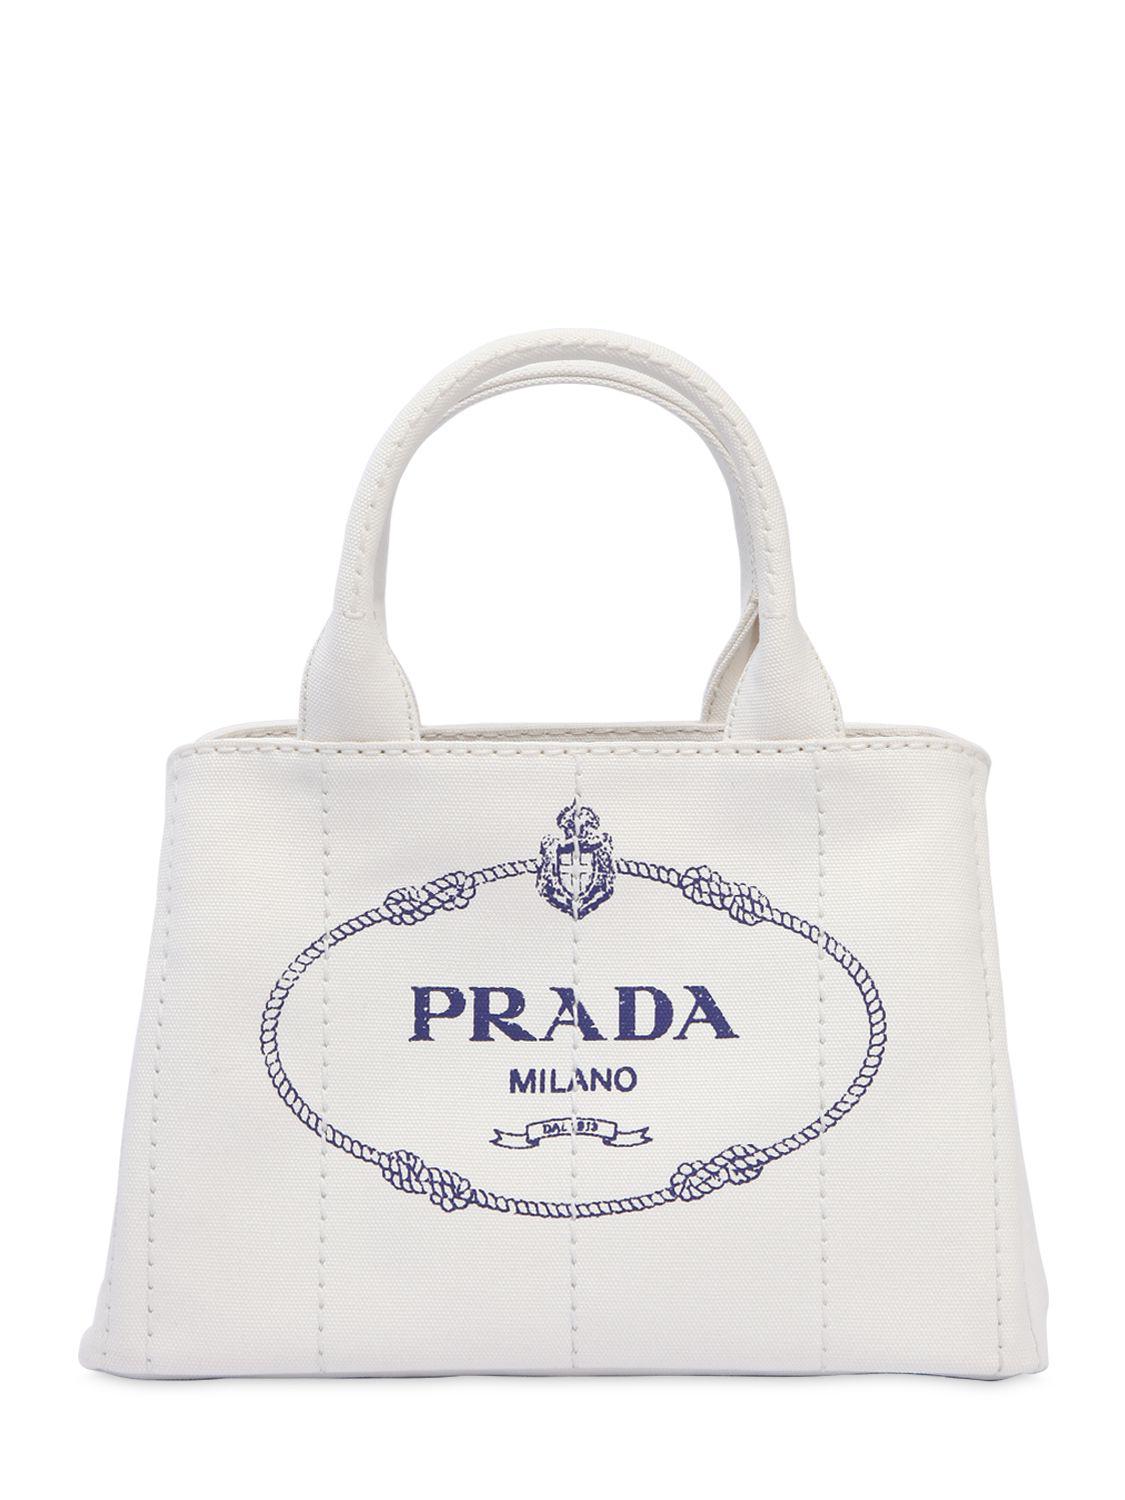 My other bag are Prada tote bag, Prada Tote bag Cotton Canvas Tote Bag